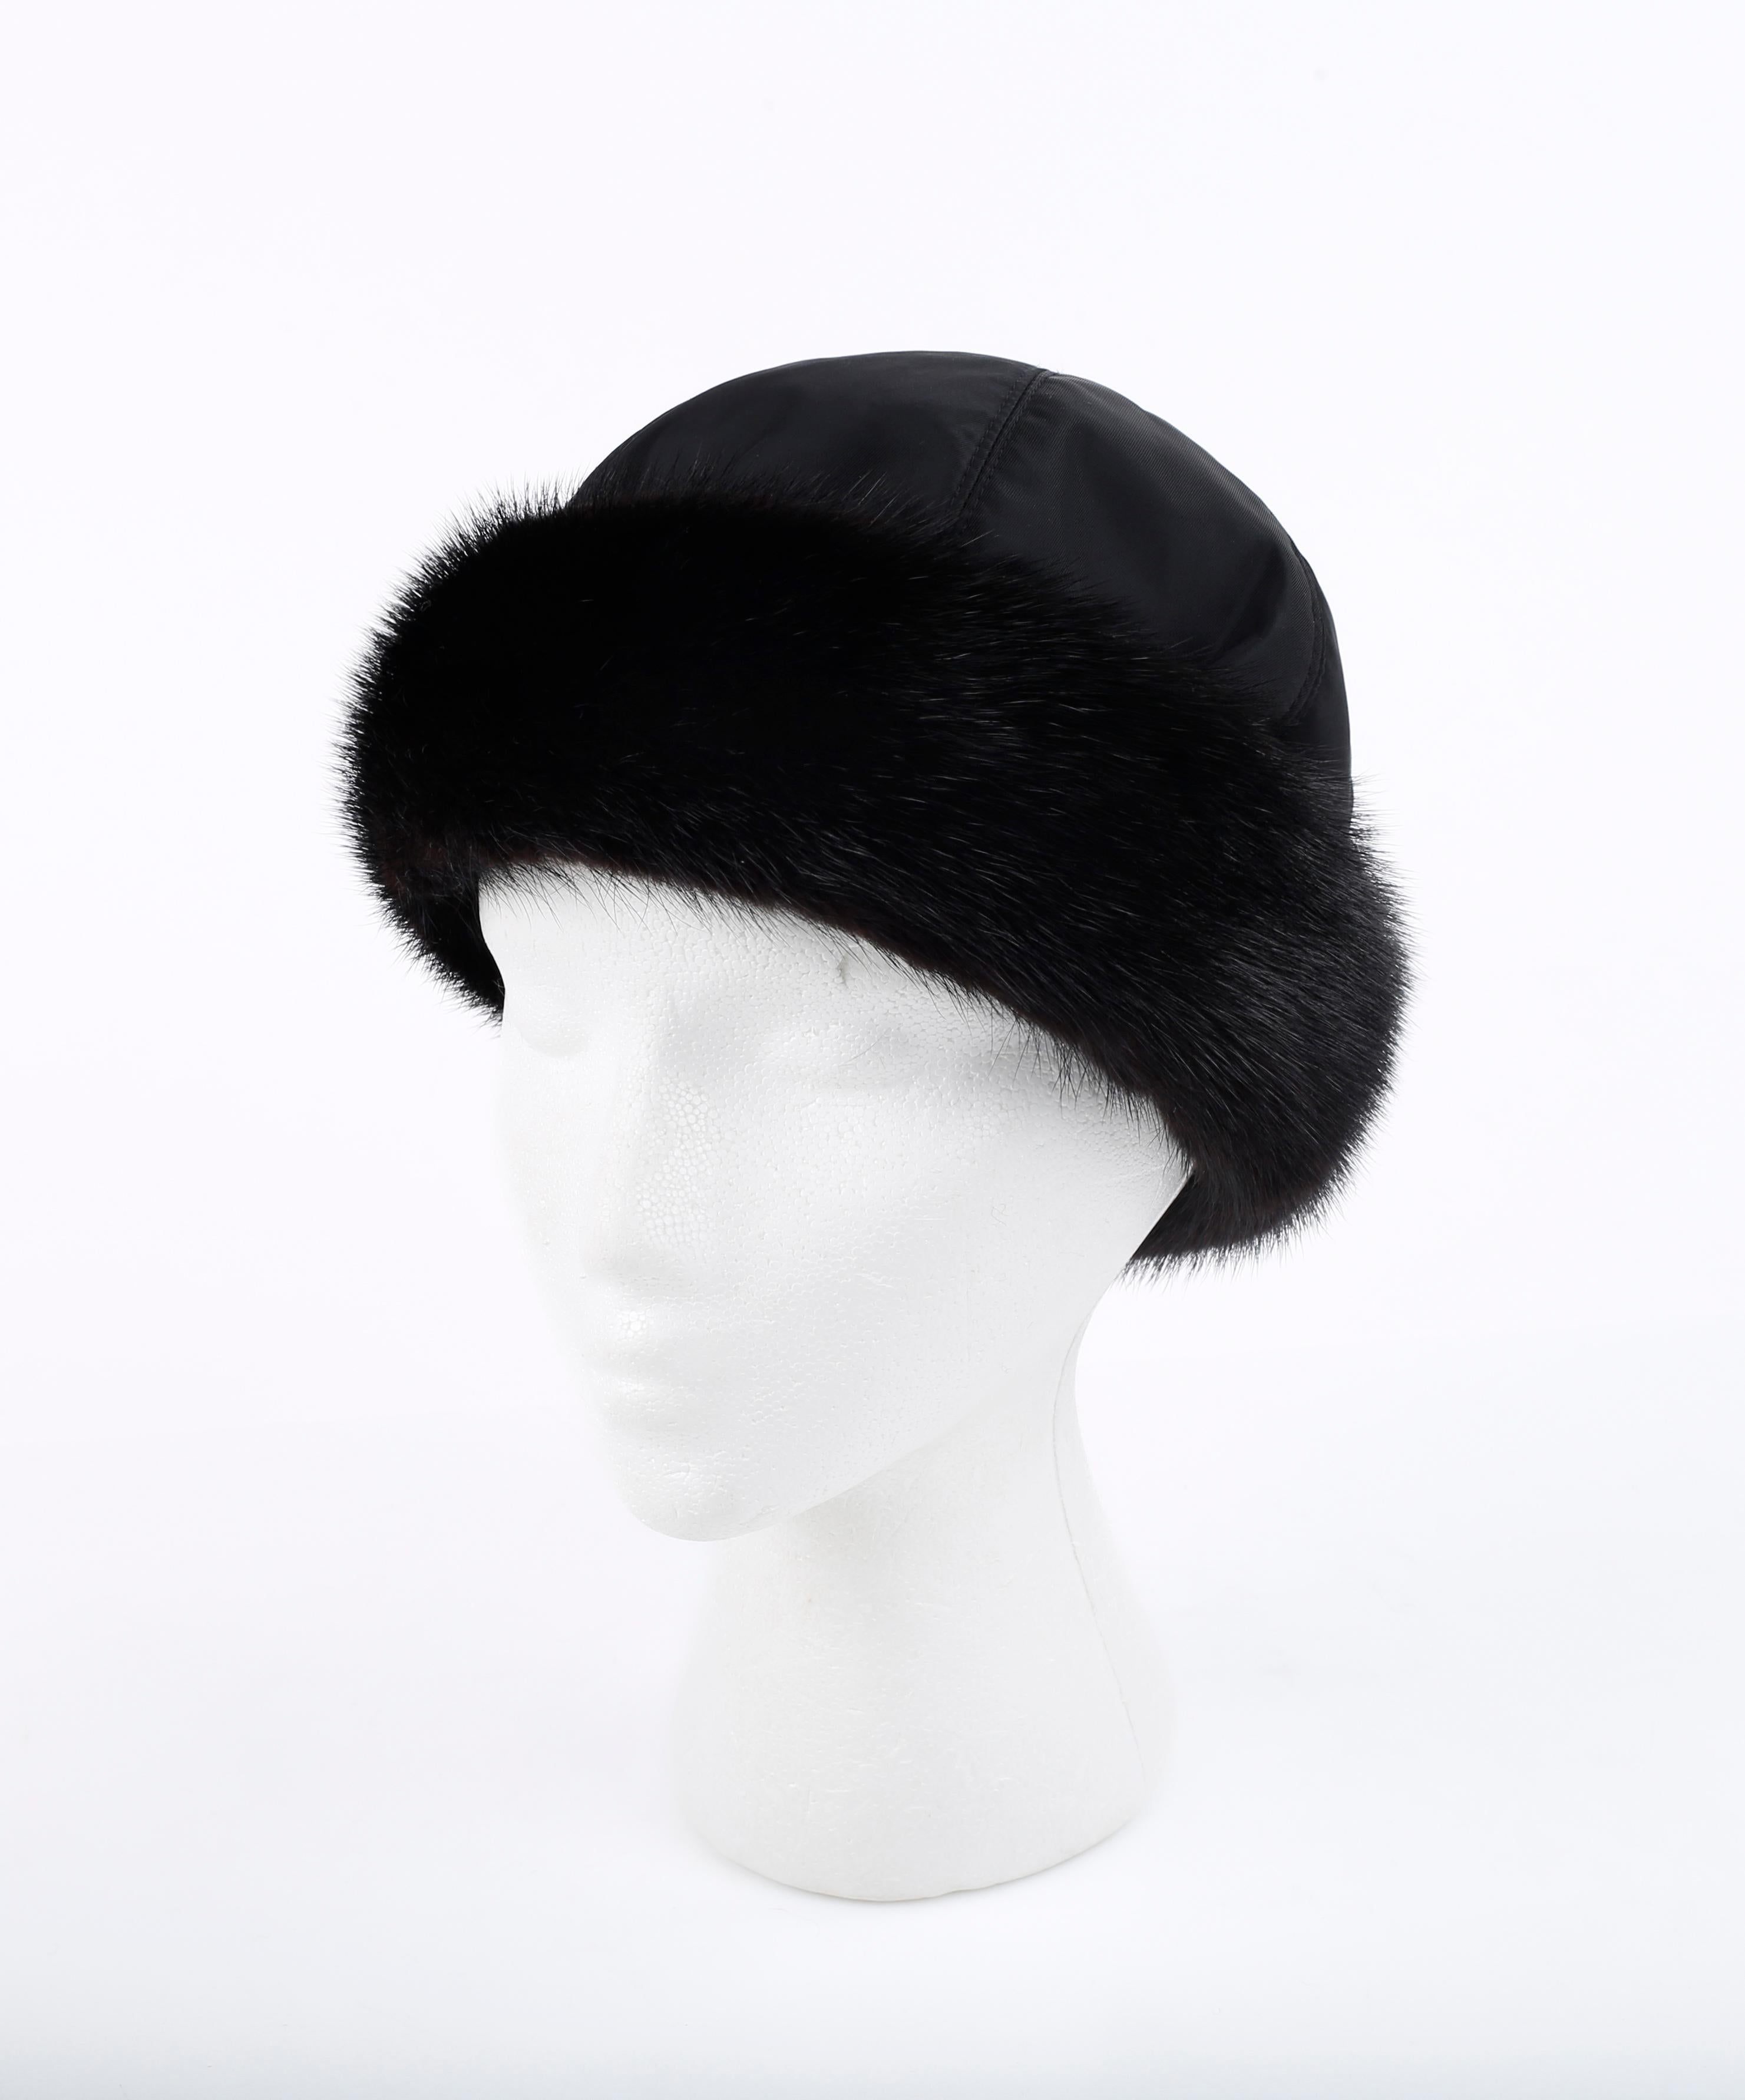 PRADA c. 1990's Black Mink Fur Nylon Winter Hat Cap

Marque / Fabricant : Prada
Circa : 1990's
Designer : Miuccia Prada
Style : Winter Cap (bonnet d'hiver)
Couleur(s) : Noir
Doublée : Oui
Tissu marqué : 